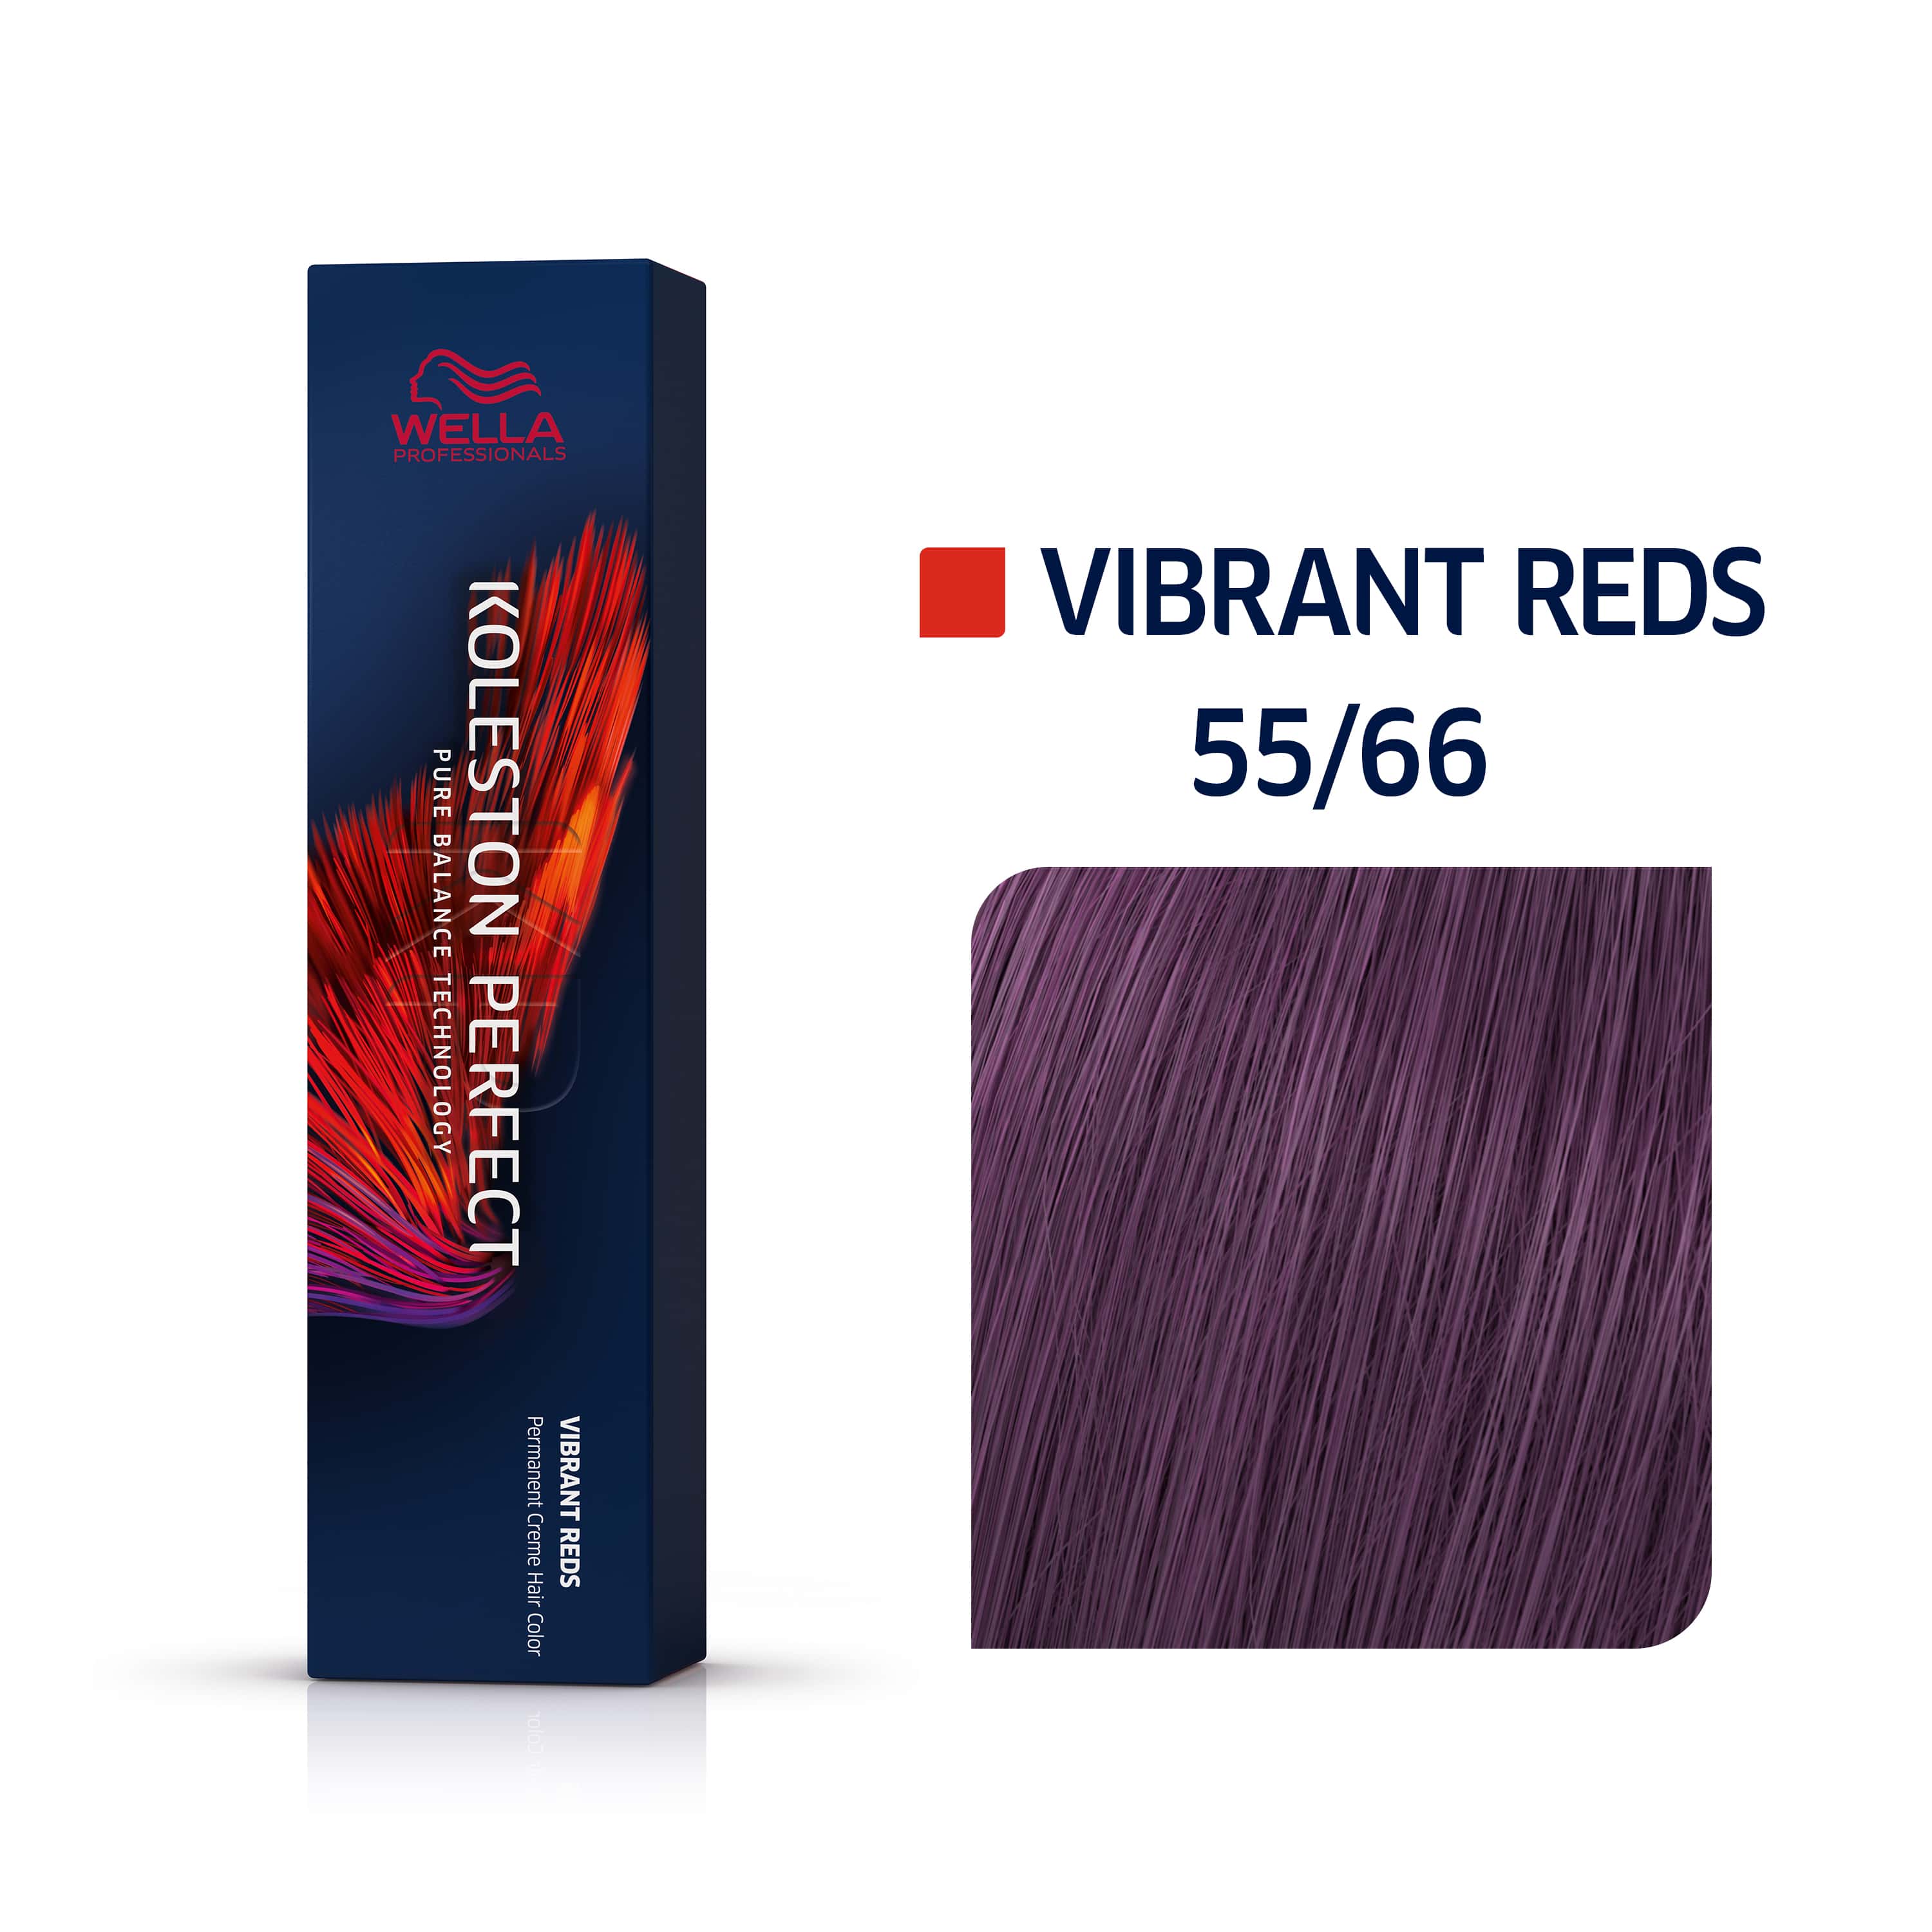 a box of wella vibrant reds 55 / 66